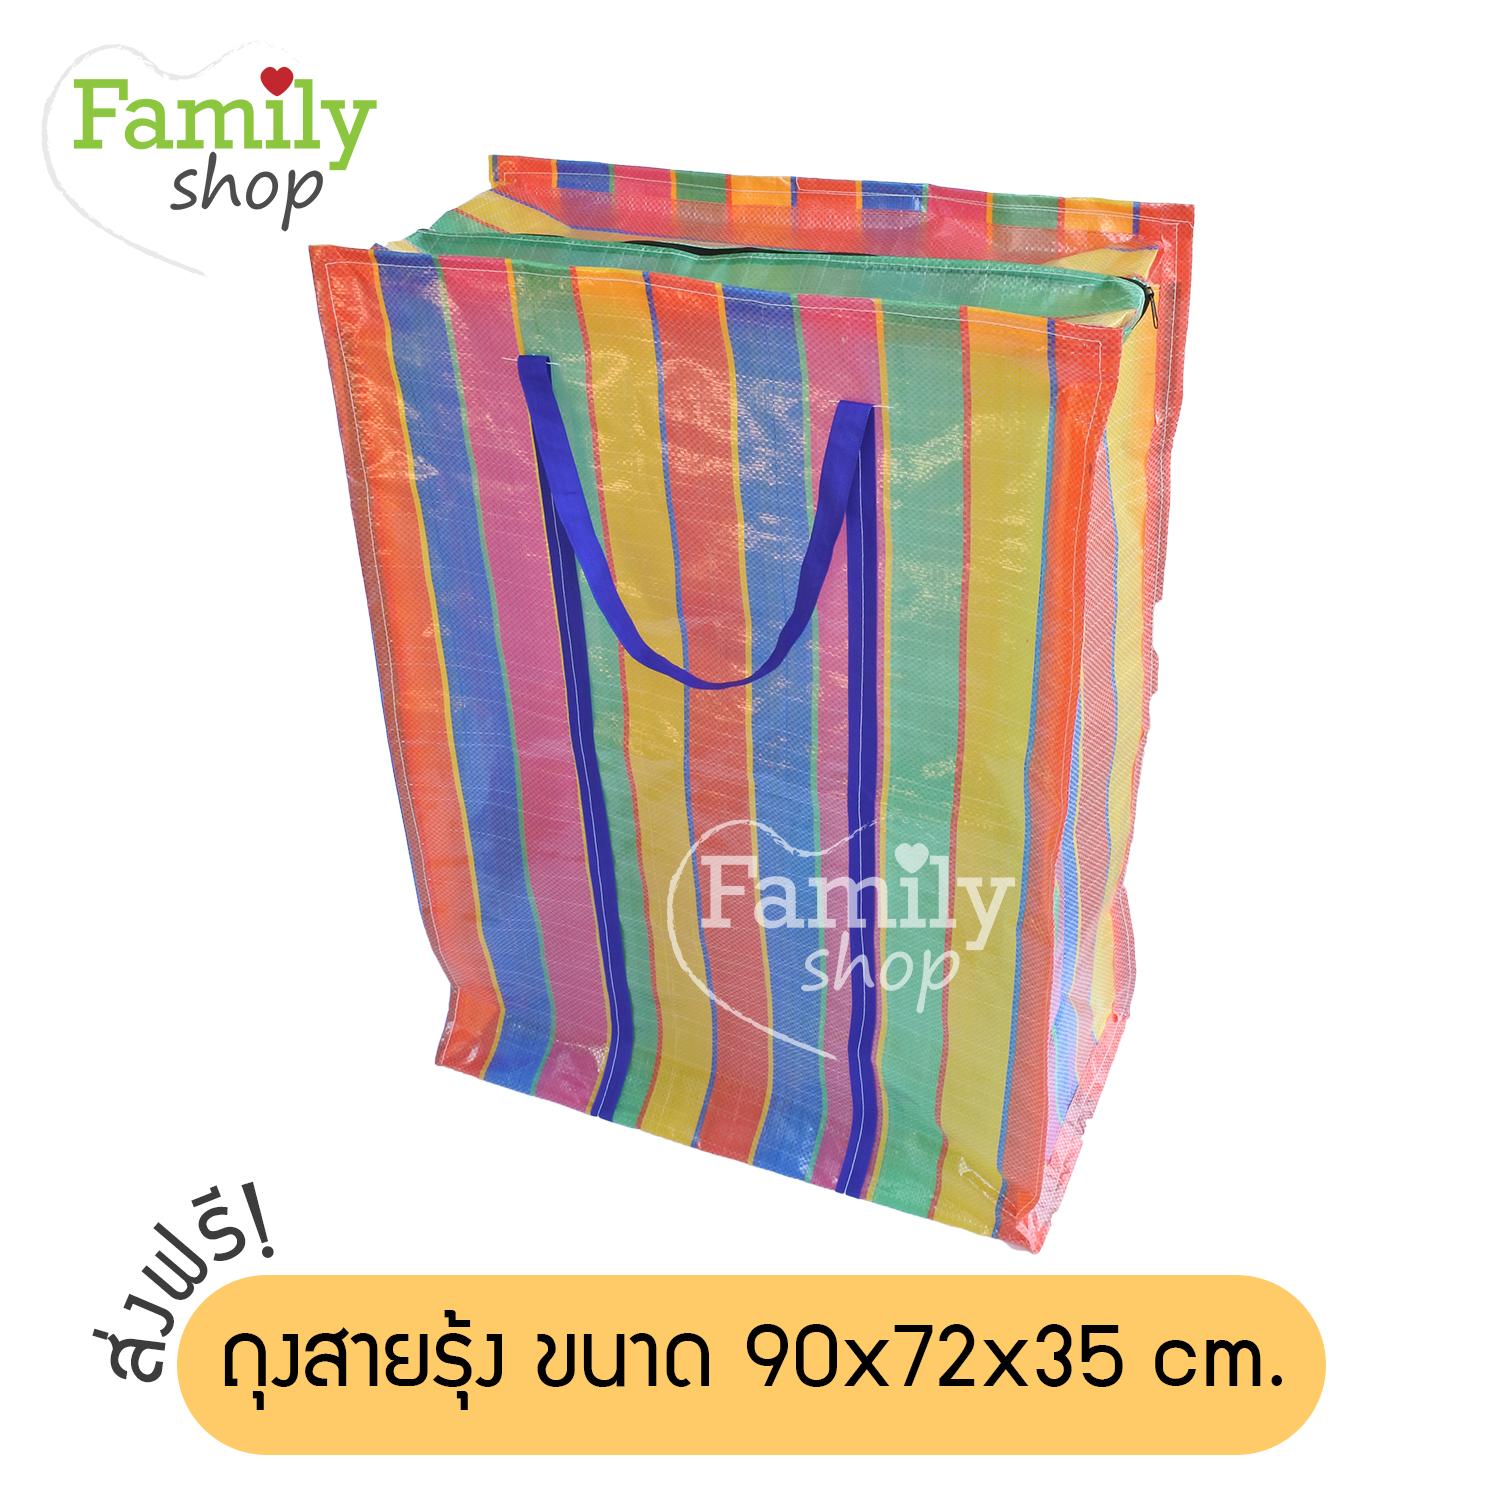 [Rianbow Bag] ถุงสายรุ้ง ถุงกระสอบ จัมโบ้! (90x72x35 cm.) แพ็ค 1 ใบ